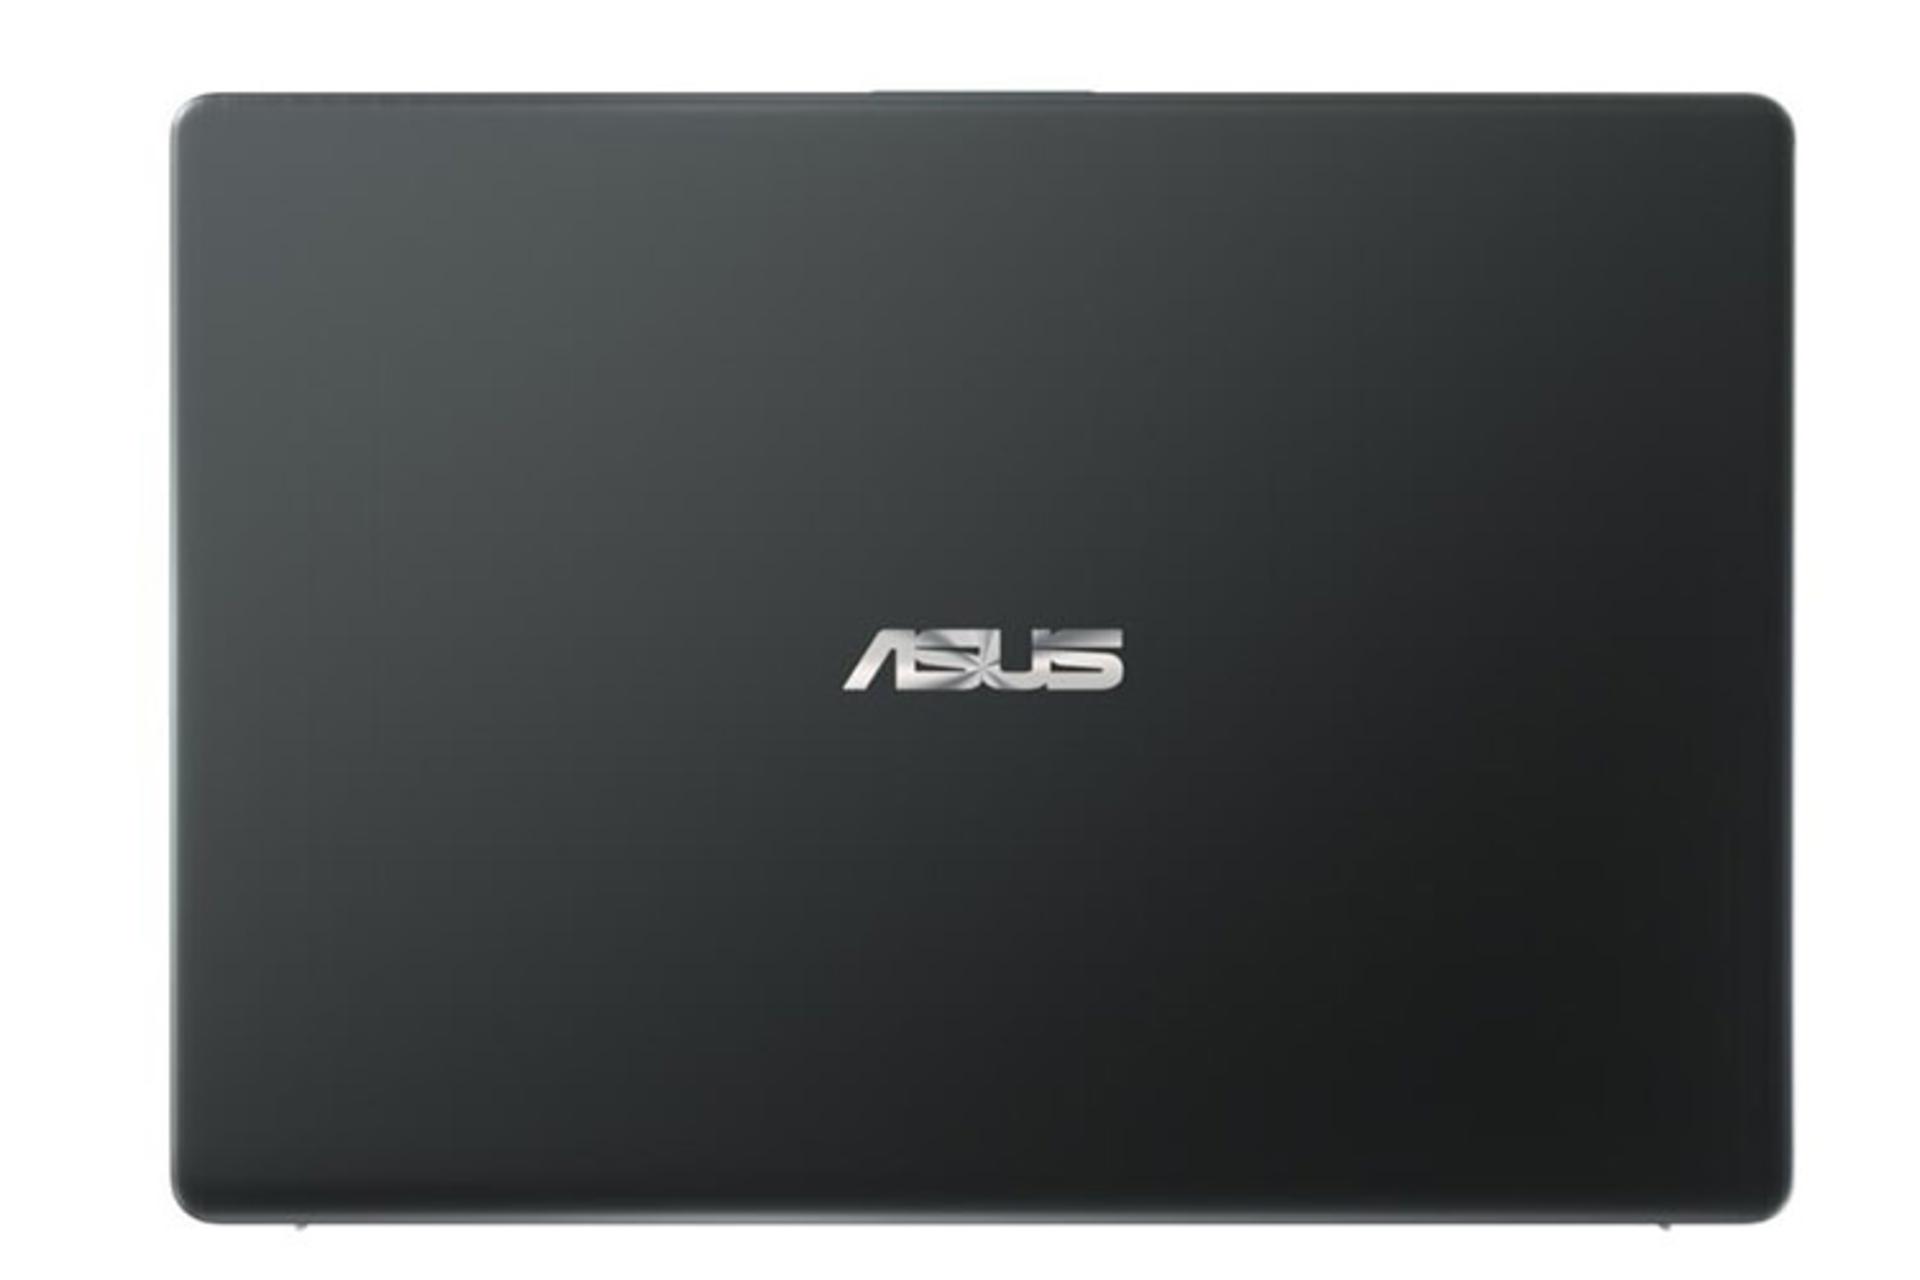 Asus VivoBook S430FN